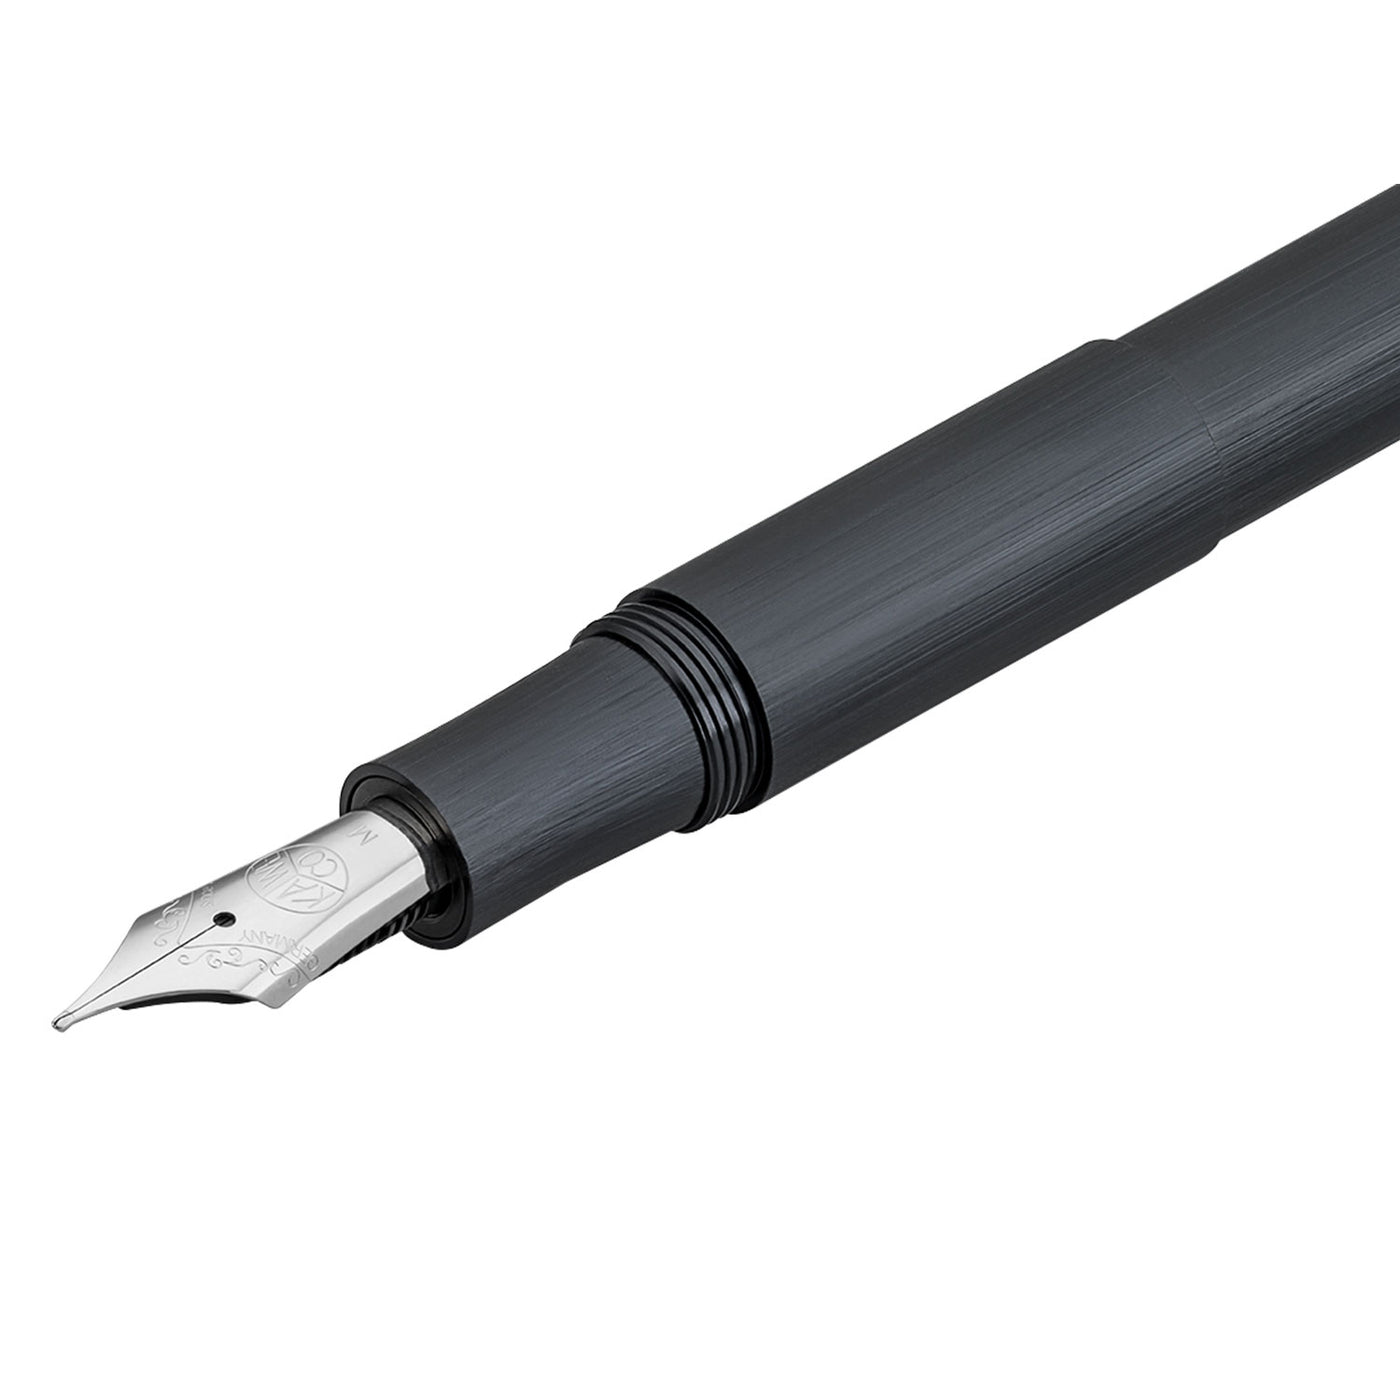 Kaweco Supra Fountain Pen with Optional Clip - Black 2